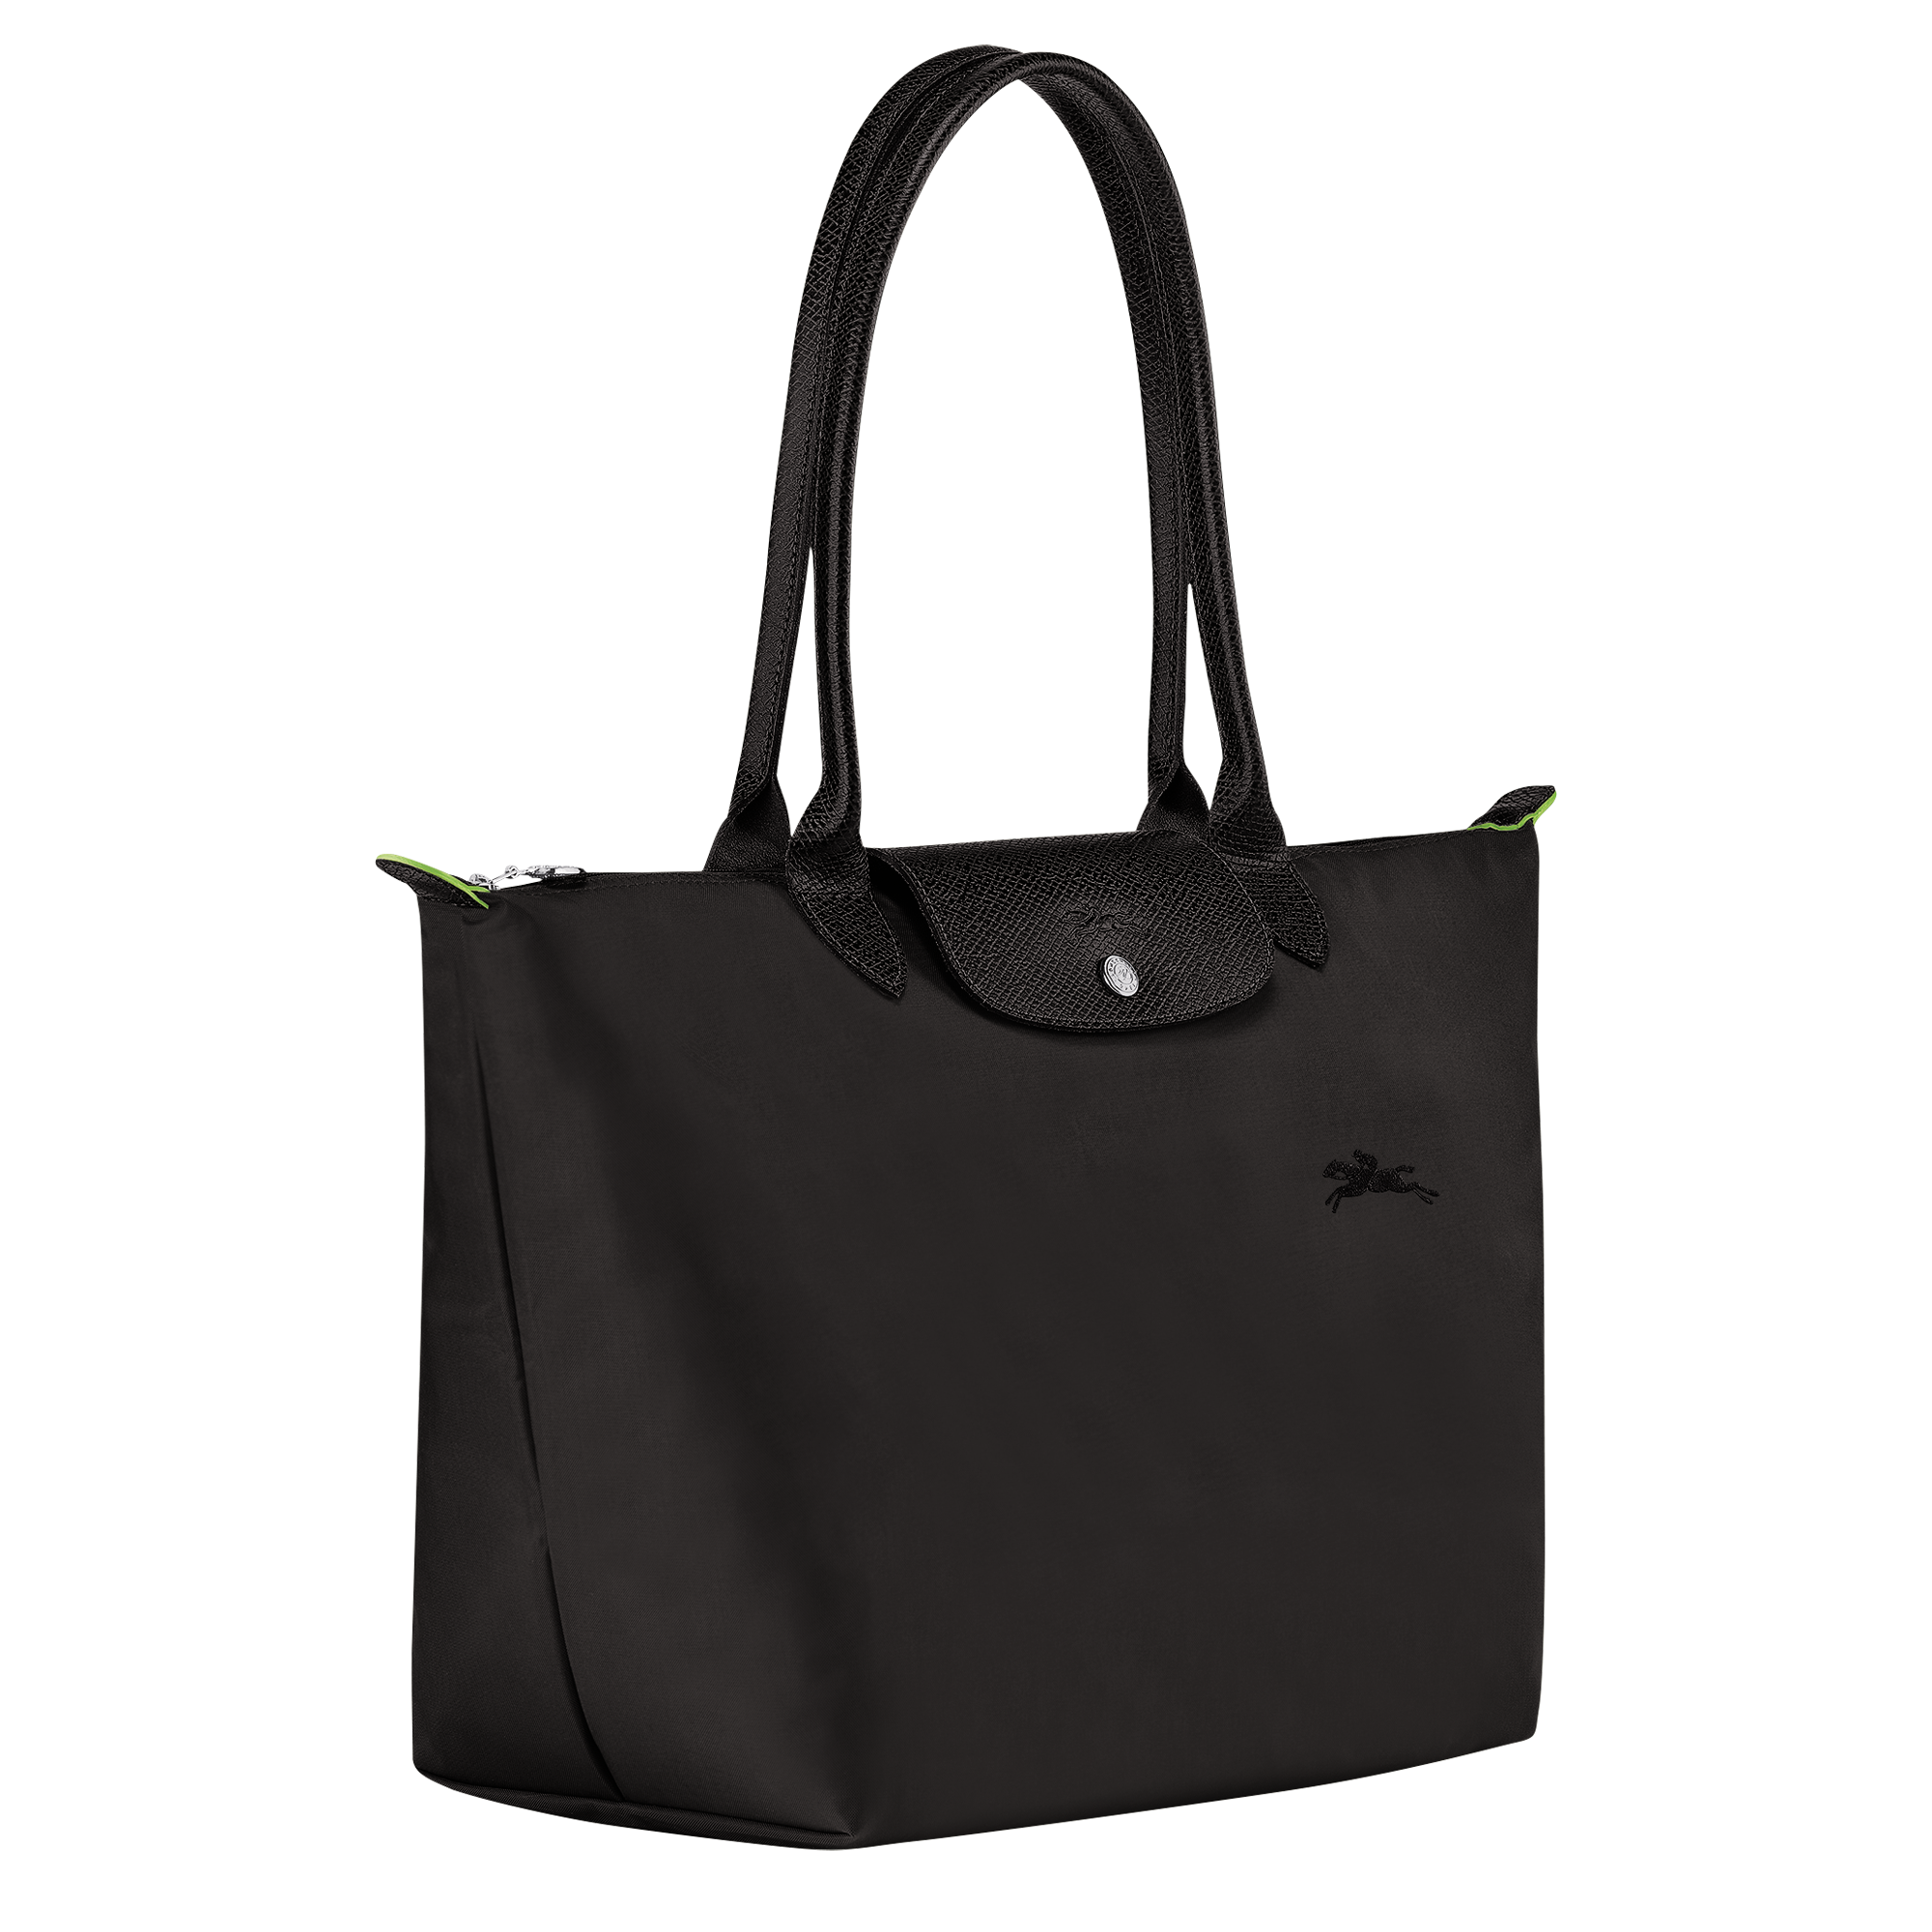 Let's Do A Longchamp Le Pliage Bag Review! - Fashion For Lunch